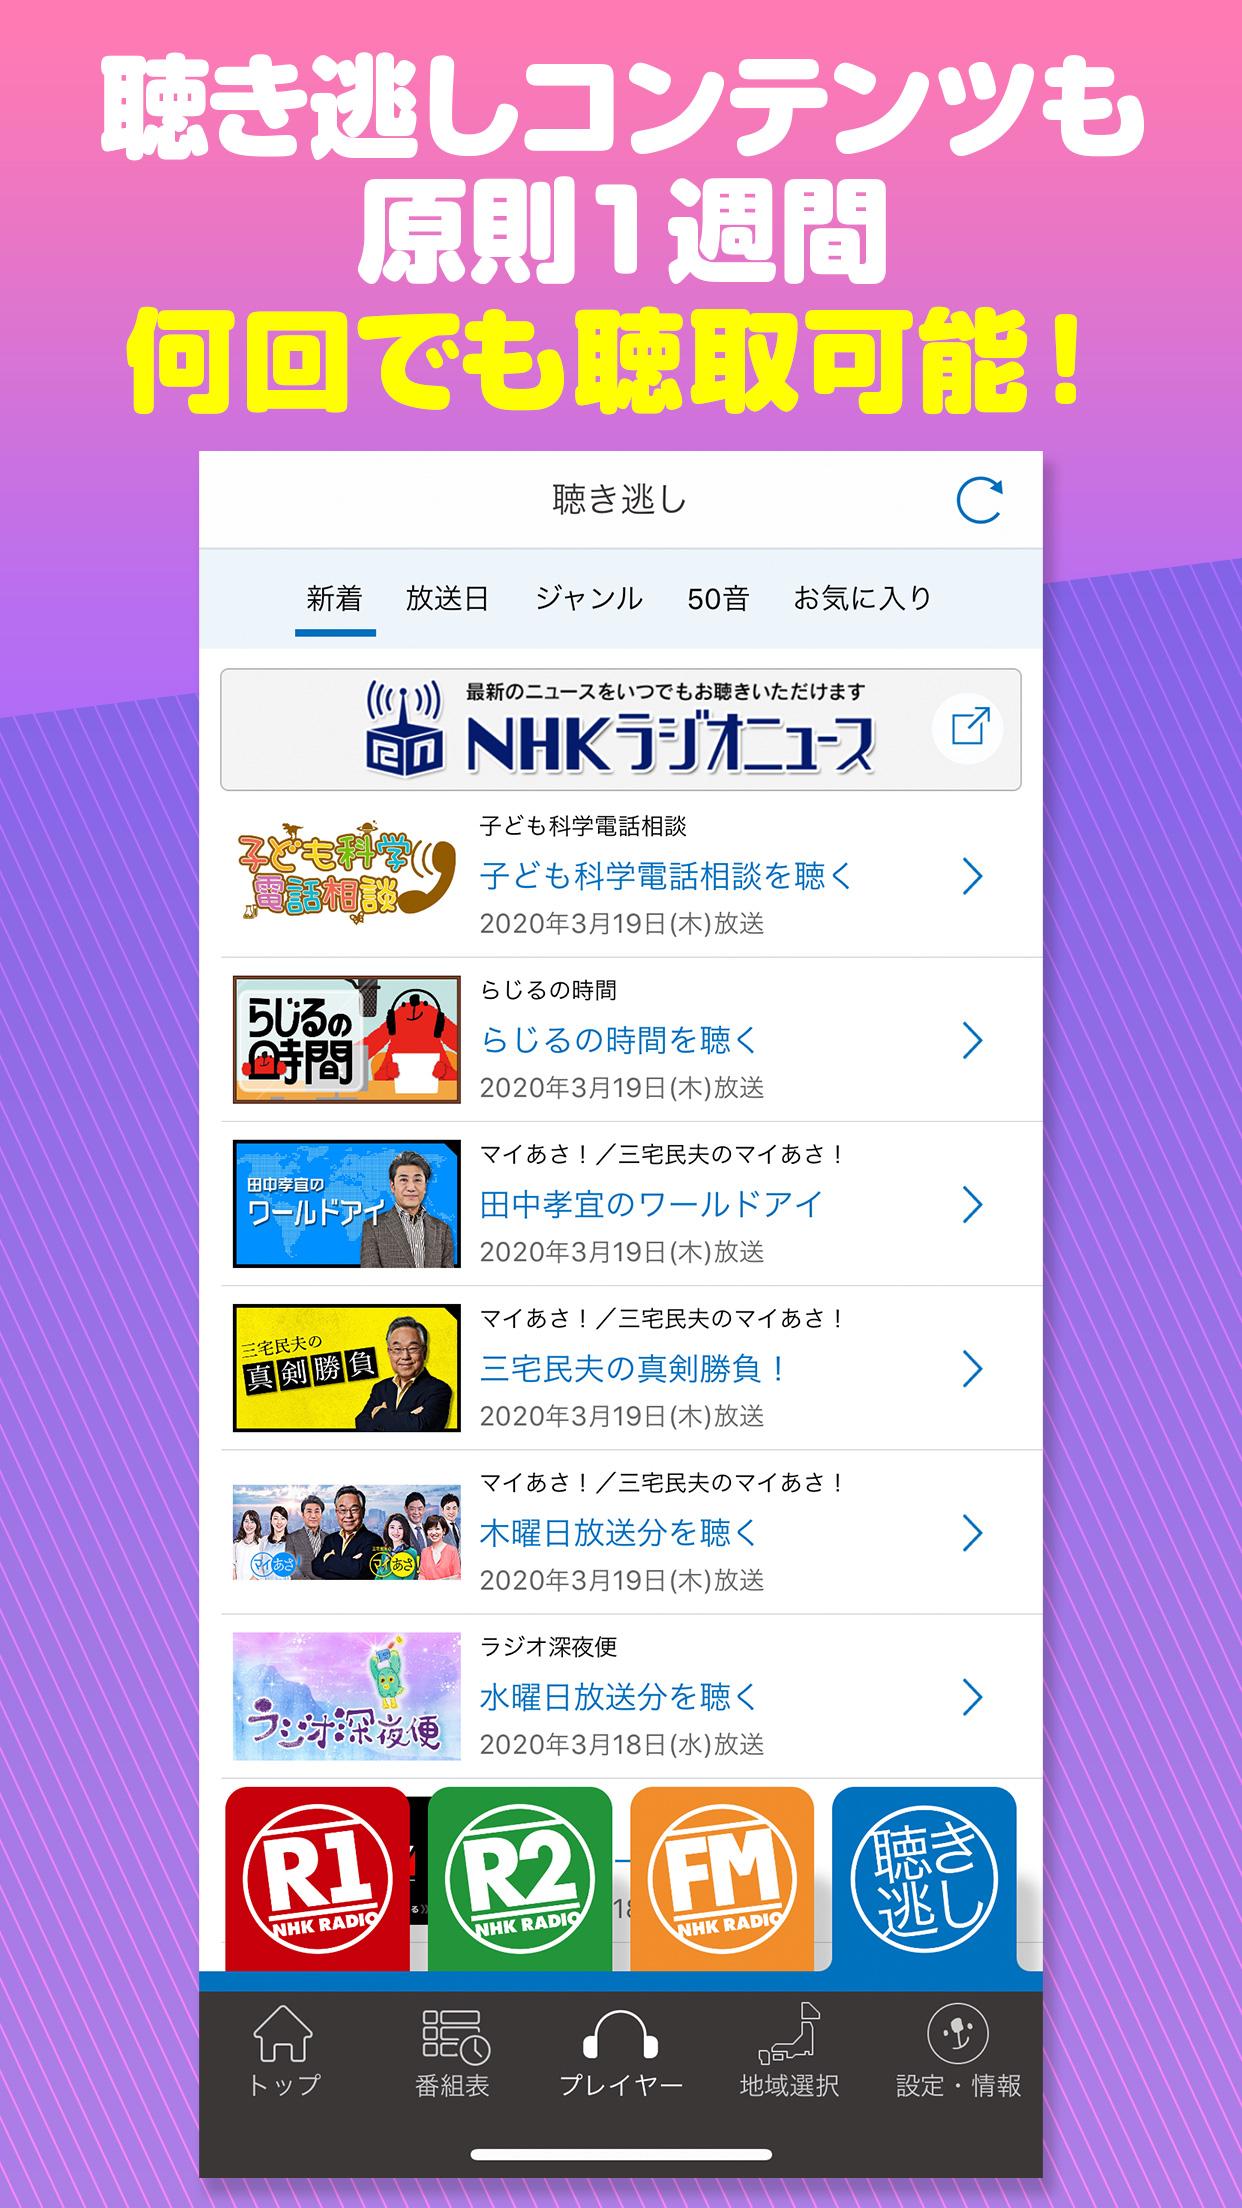 Android application NHK Radio RADIRU*RADIRU screenshort